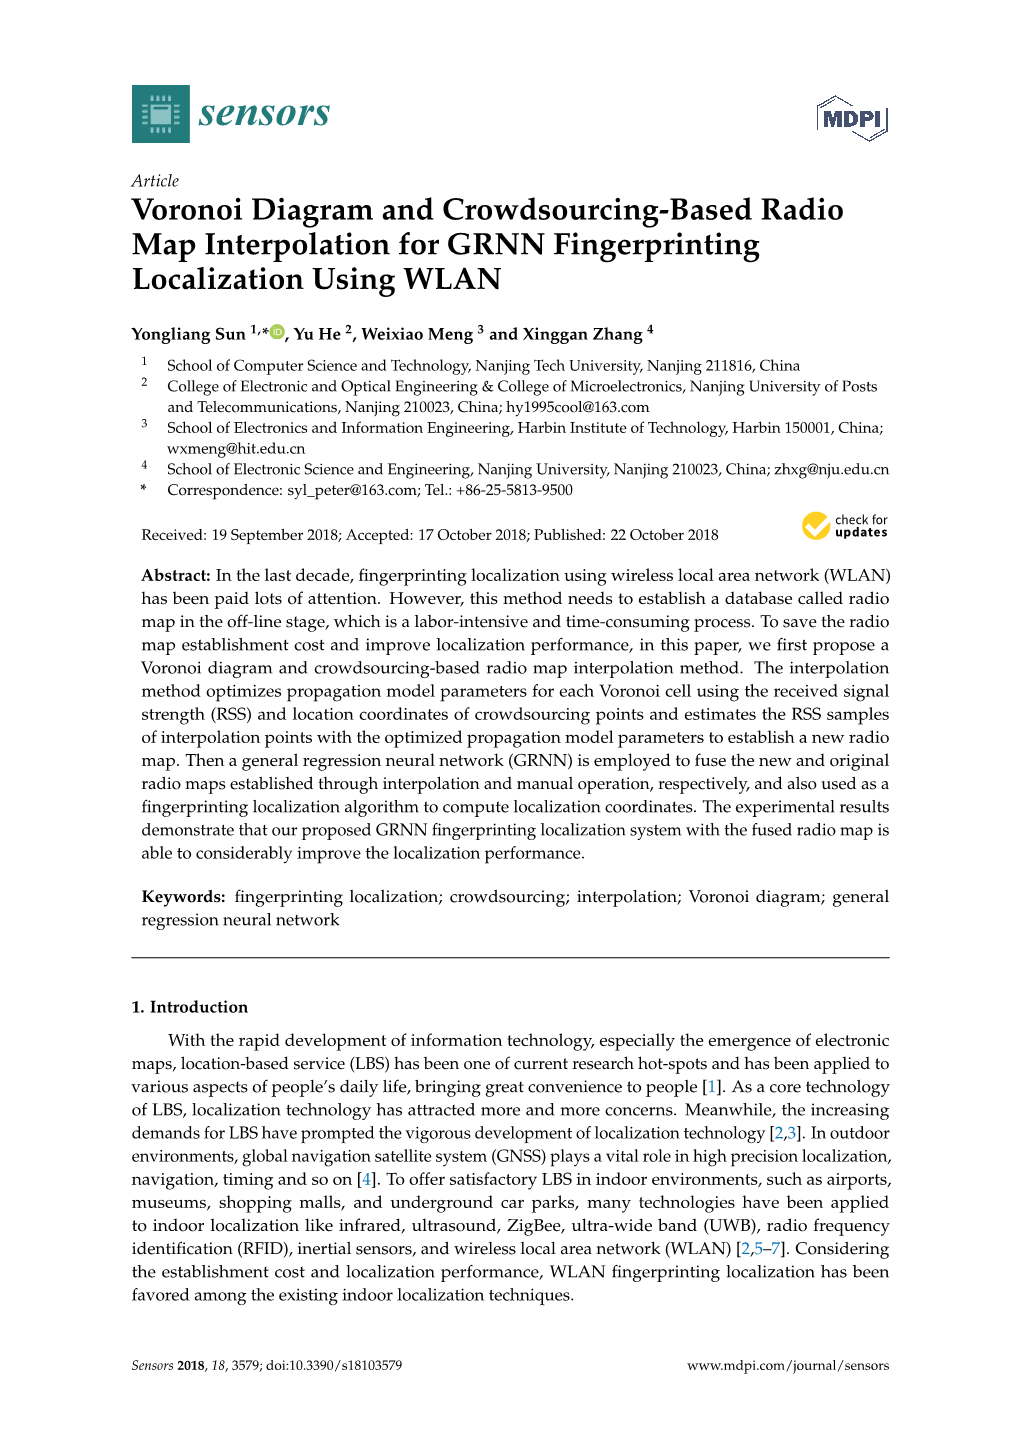 Voronoi Diagram and Crowdsourcing-Based Radio Map Interpolation for GRNN Fingerprinting Localization Using WLAN